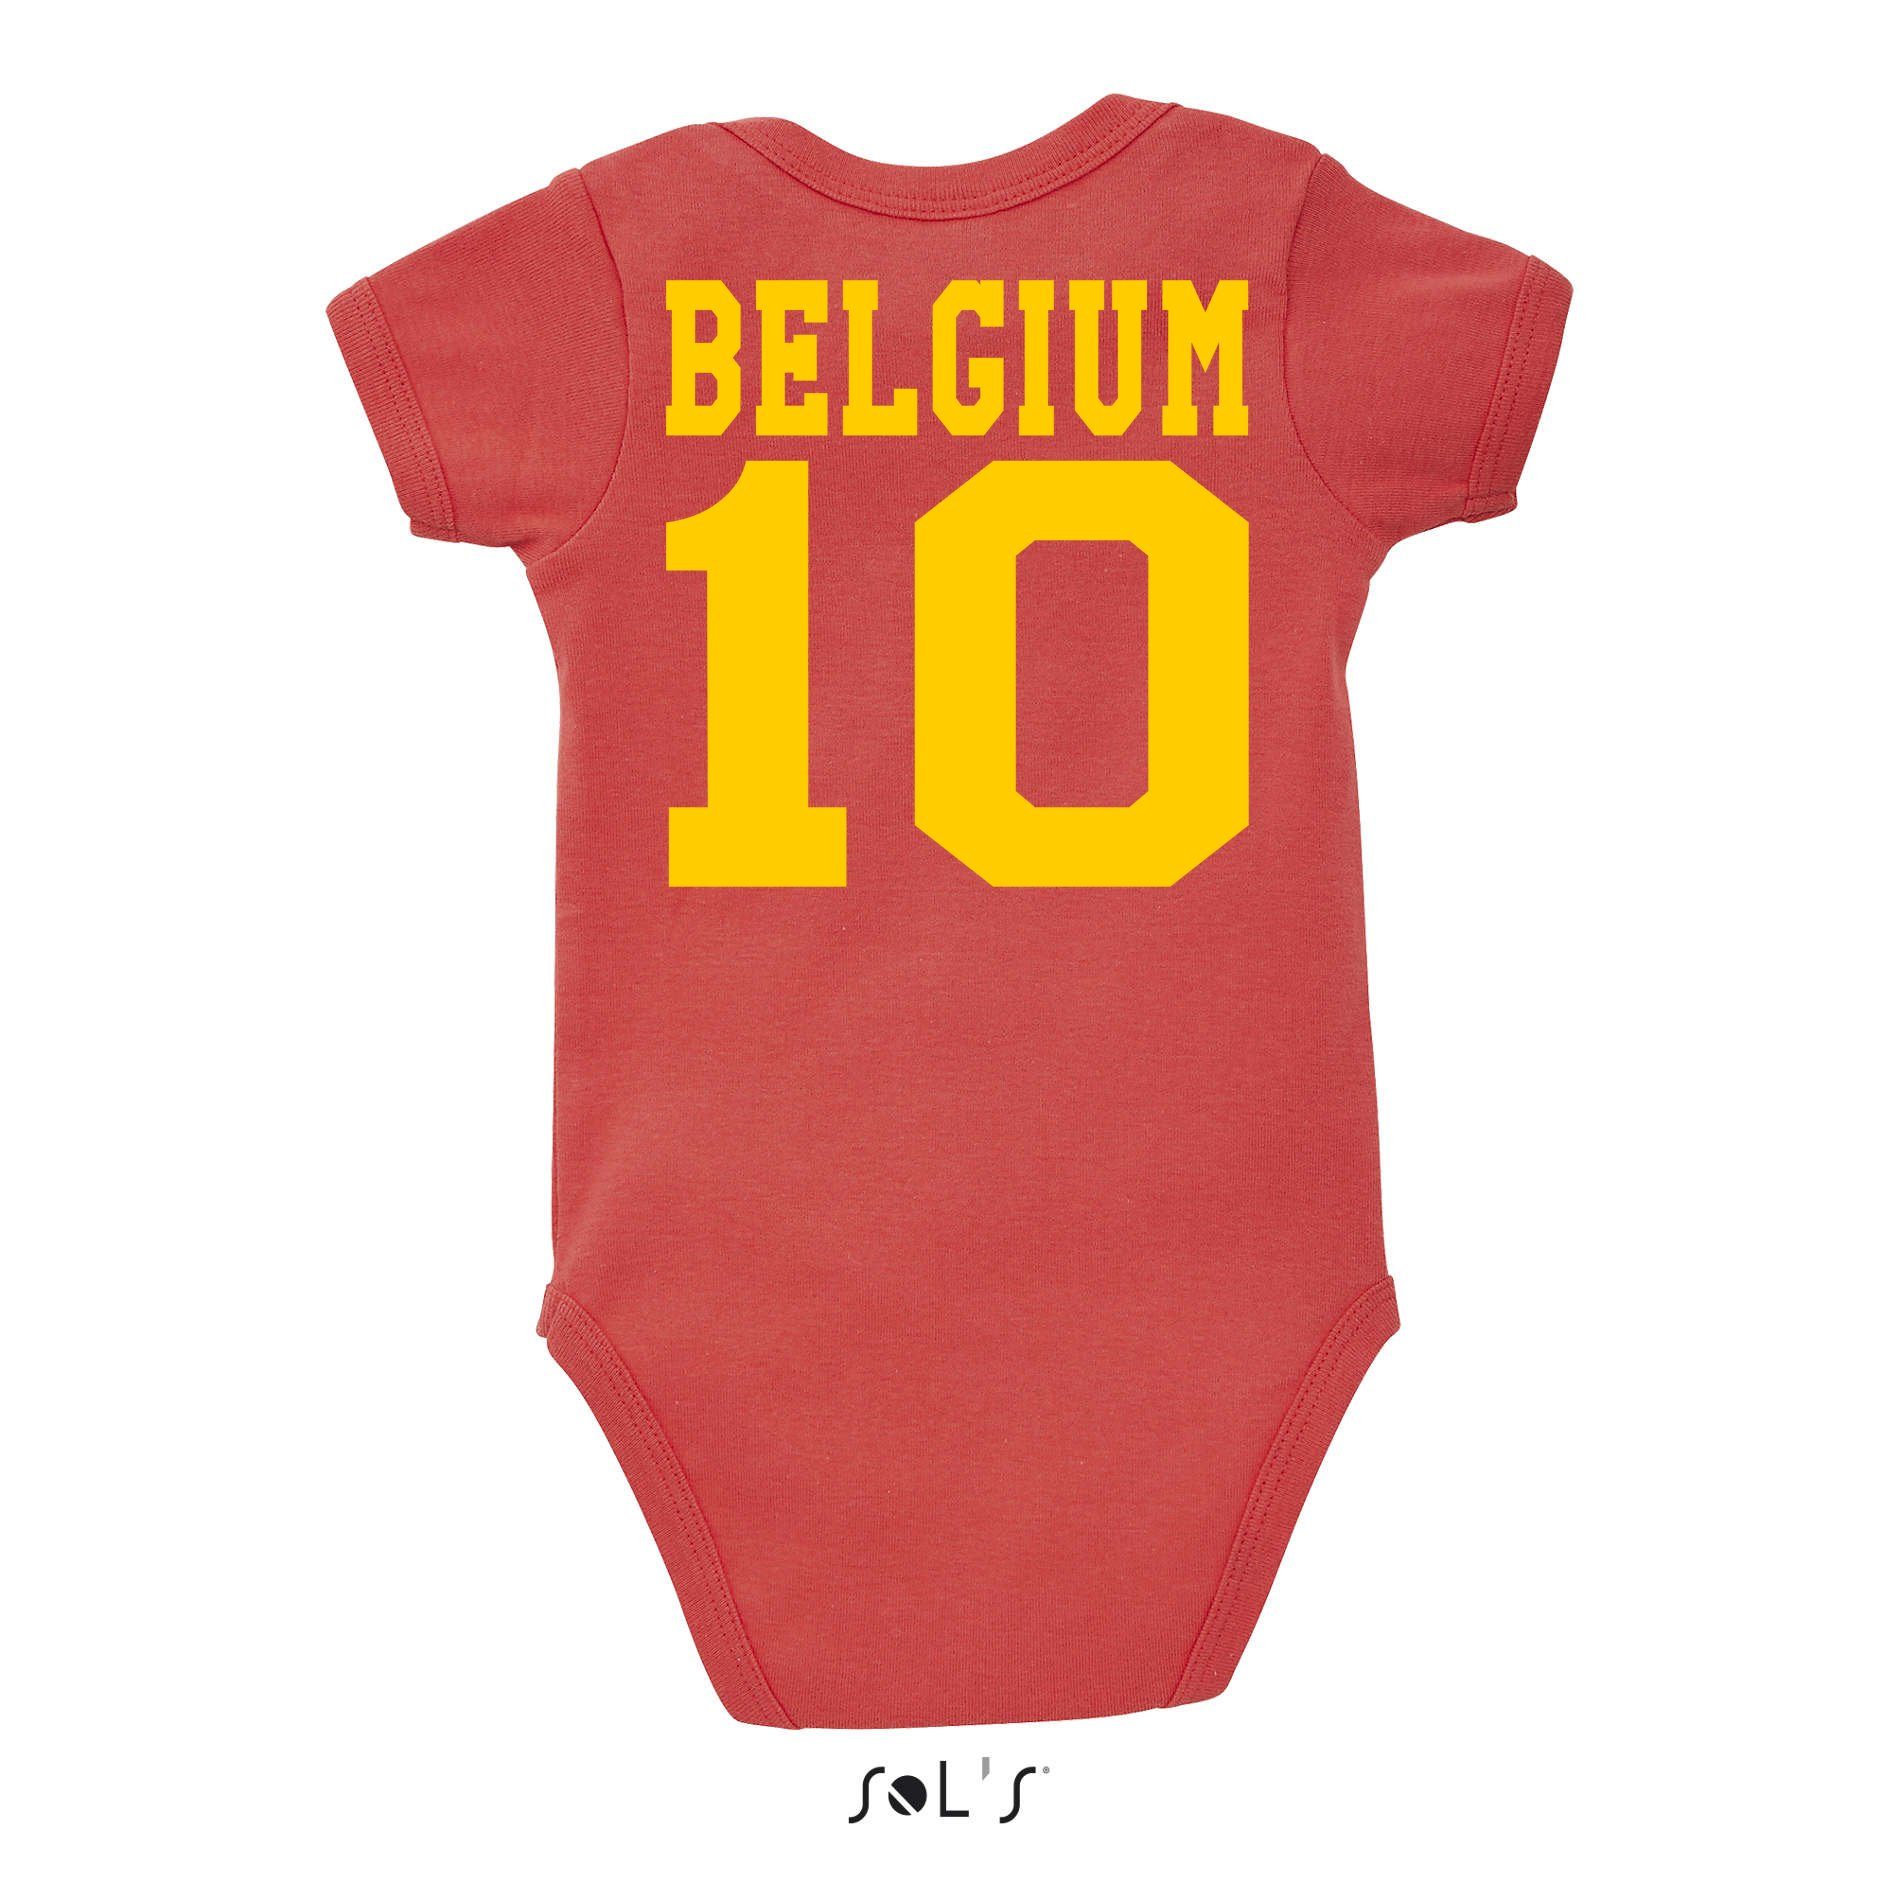 Trikot Baby Blondie Sport Kinder Fußball Weltmeister Brownie & Meister WM Belgien Strampler